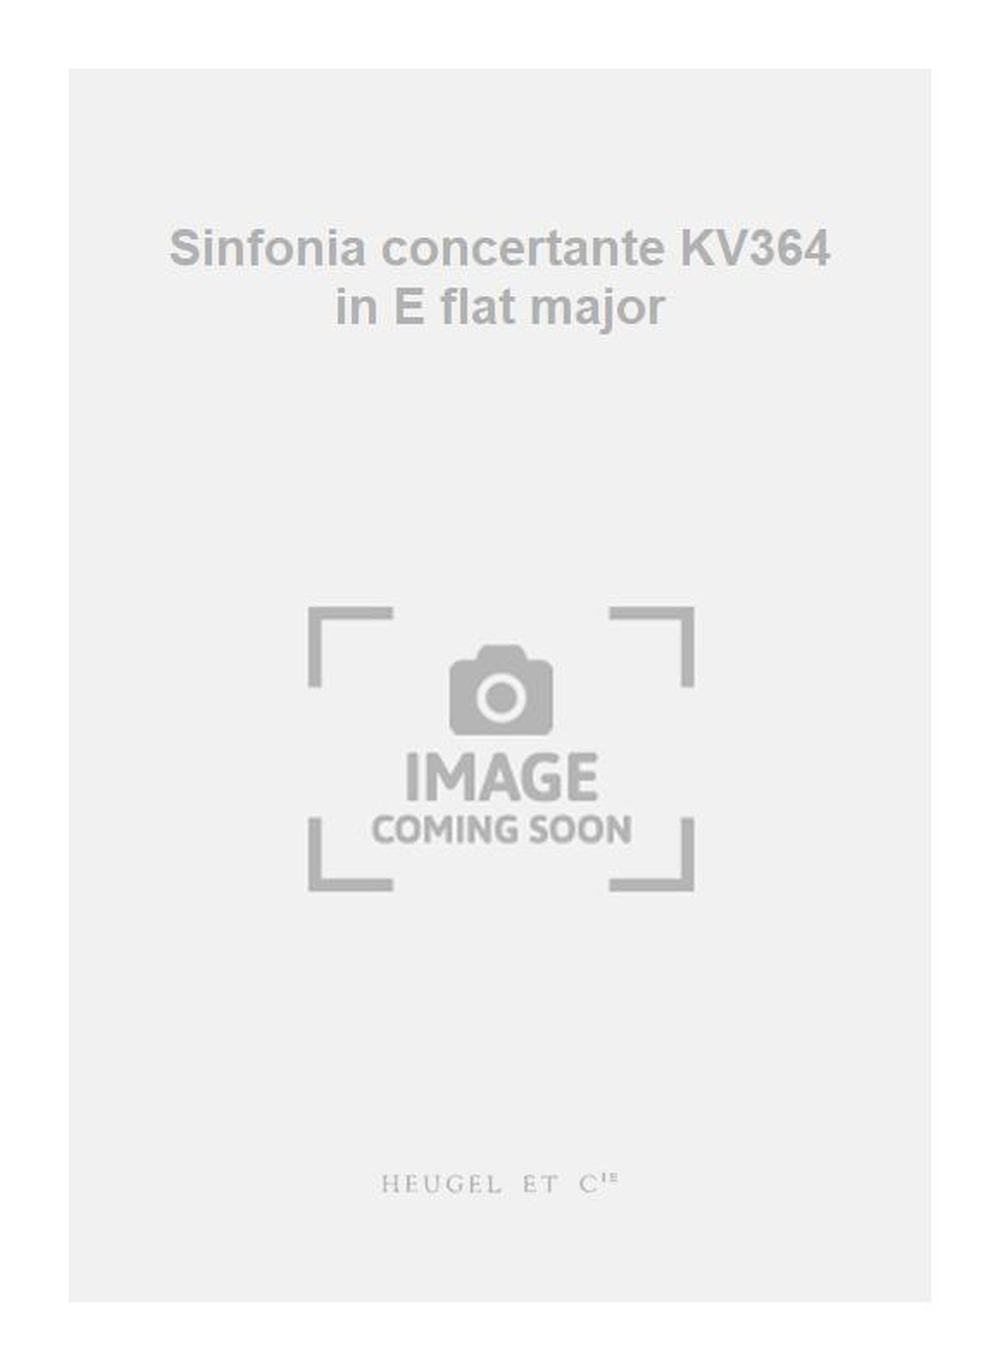 Wolfgang Amadeus Mozart: Sinfonia concertante KV364 in E flat major